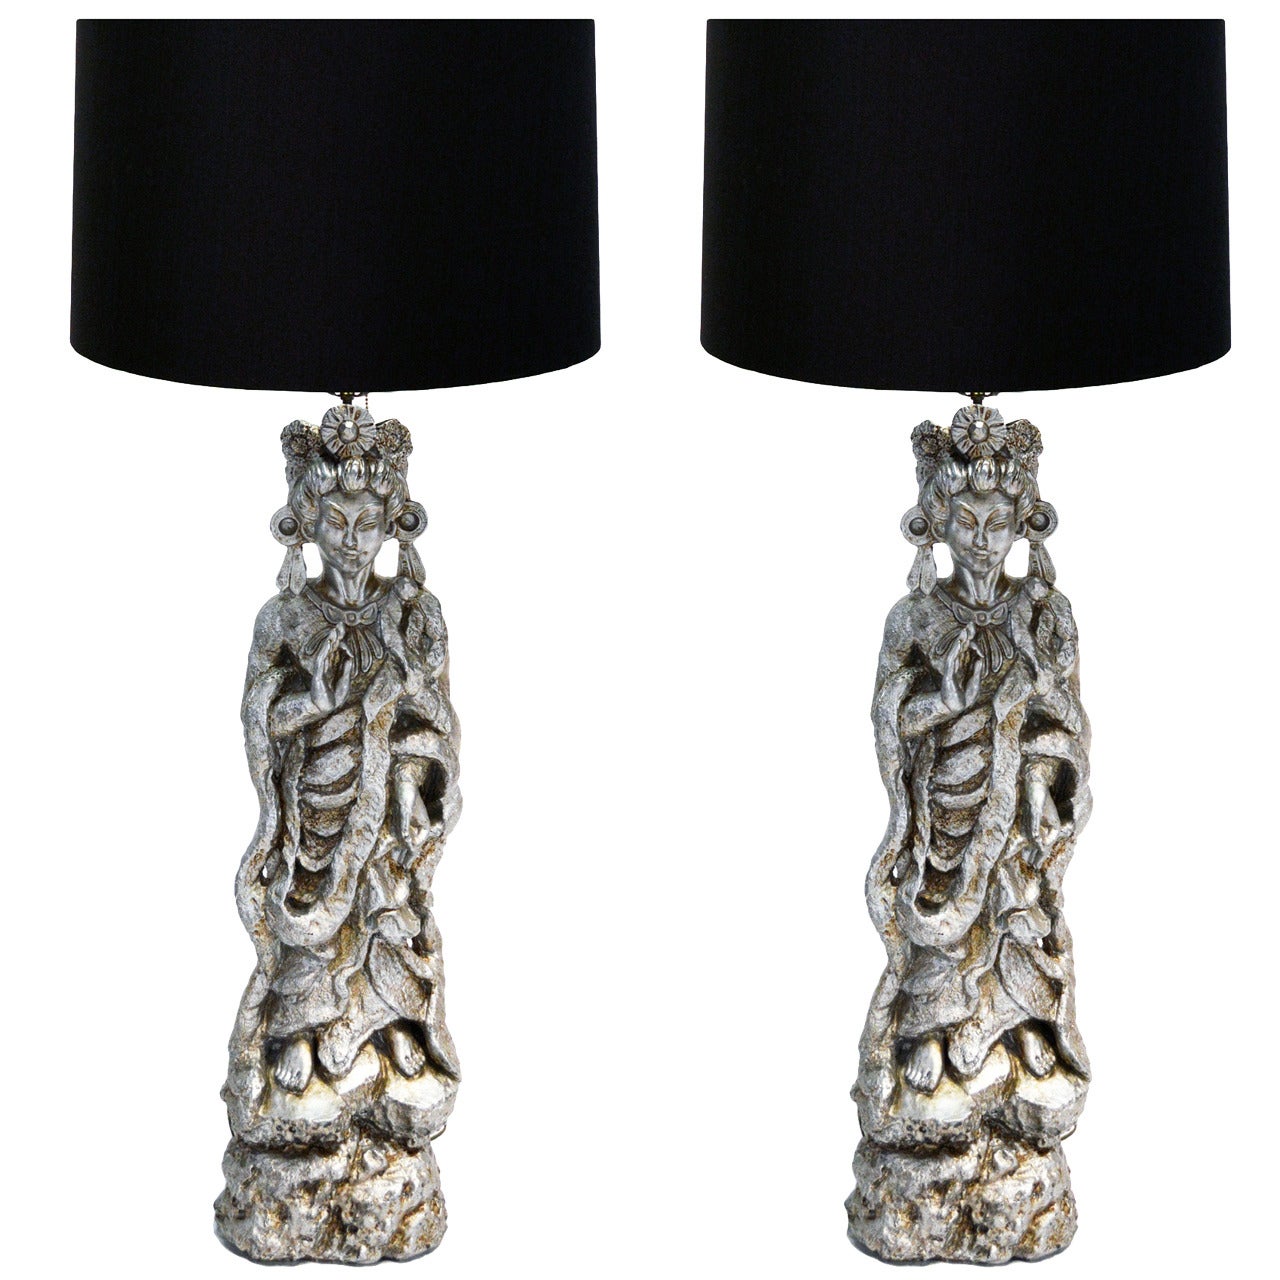 Pair of Monumental 1950s Asian Figure Lamps